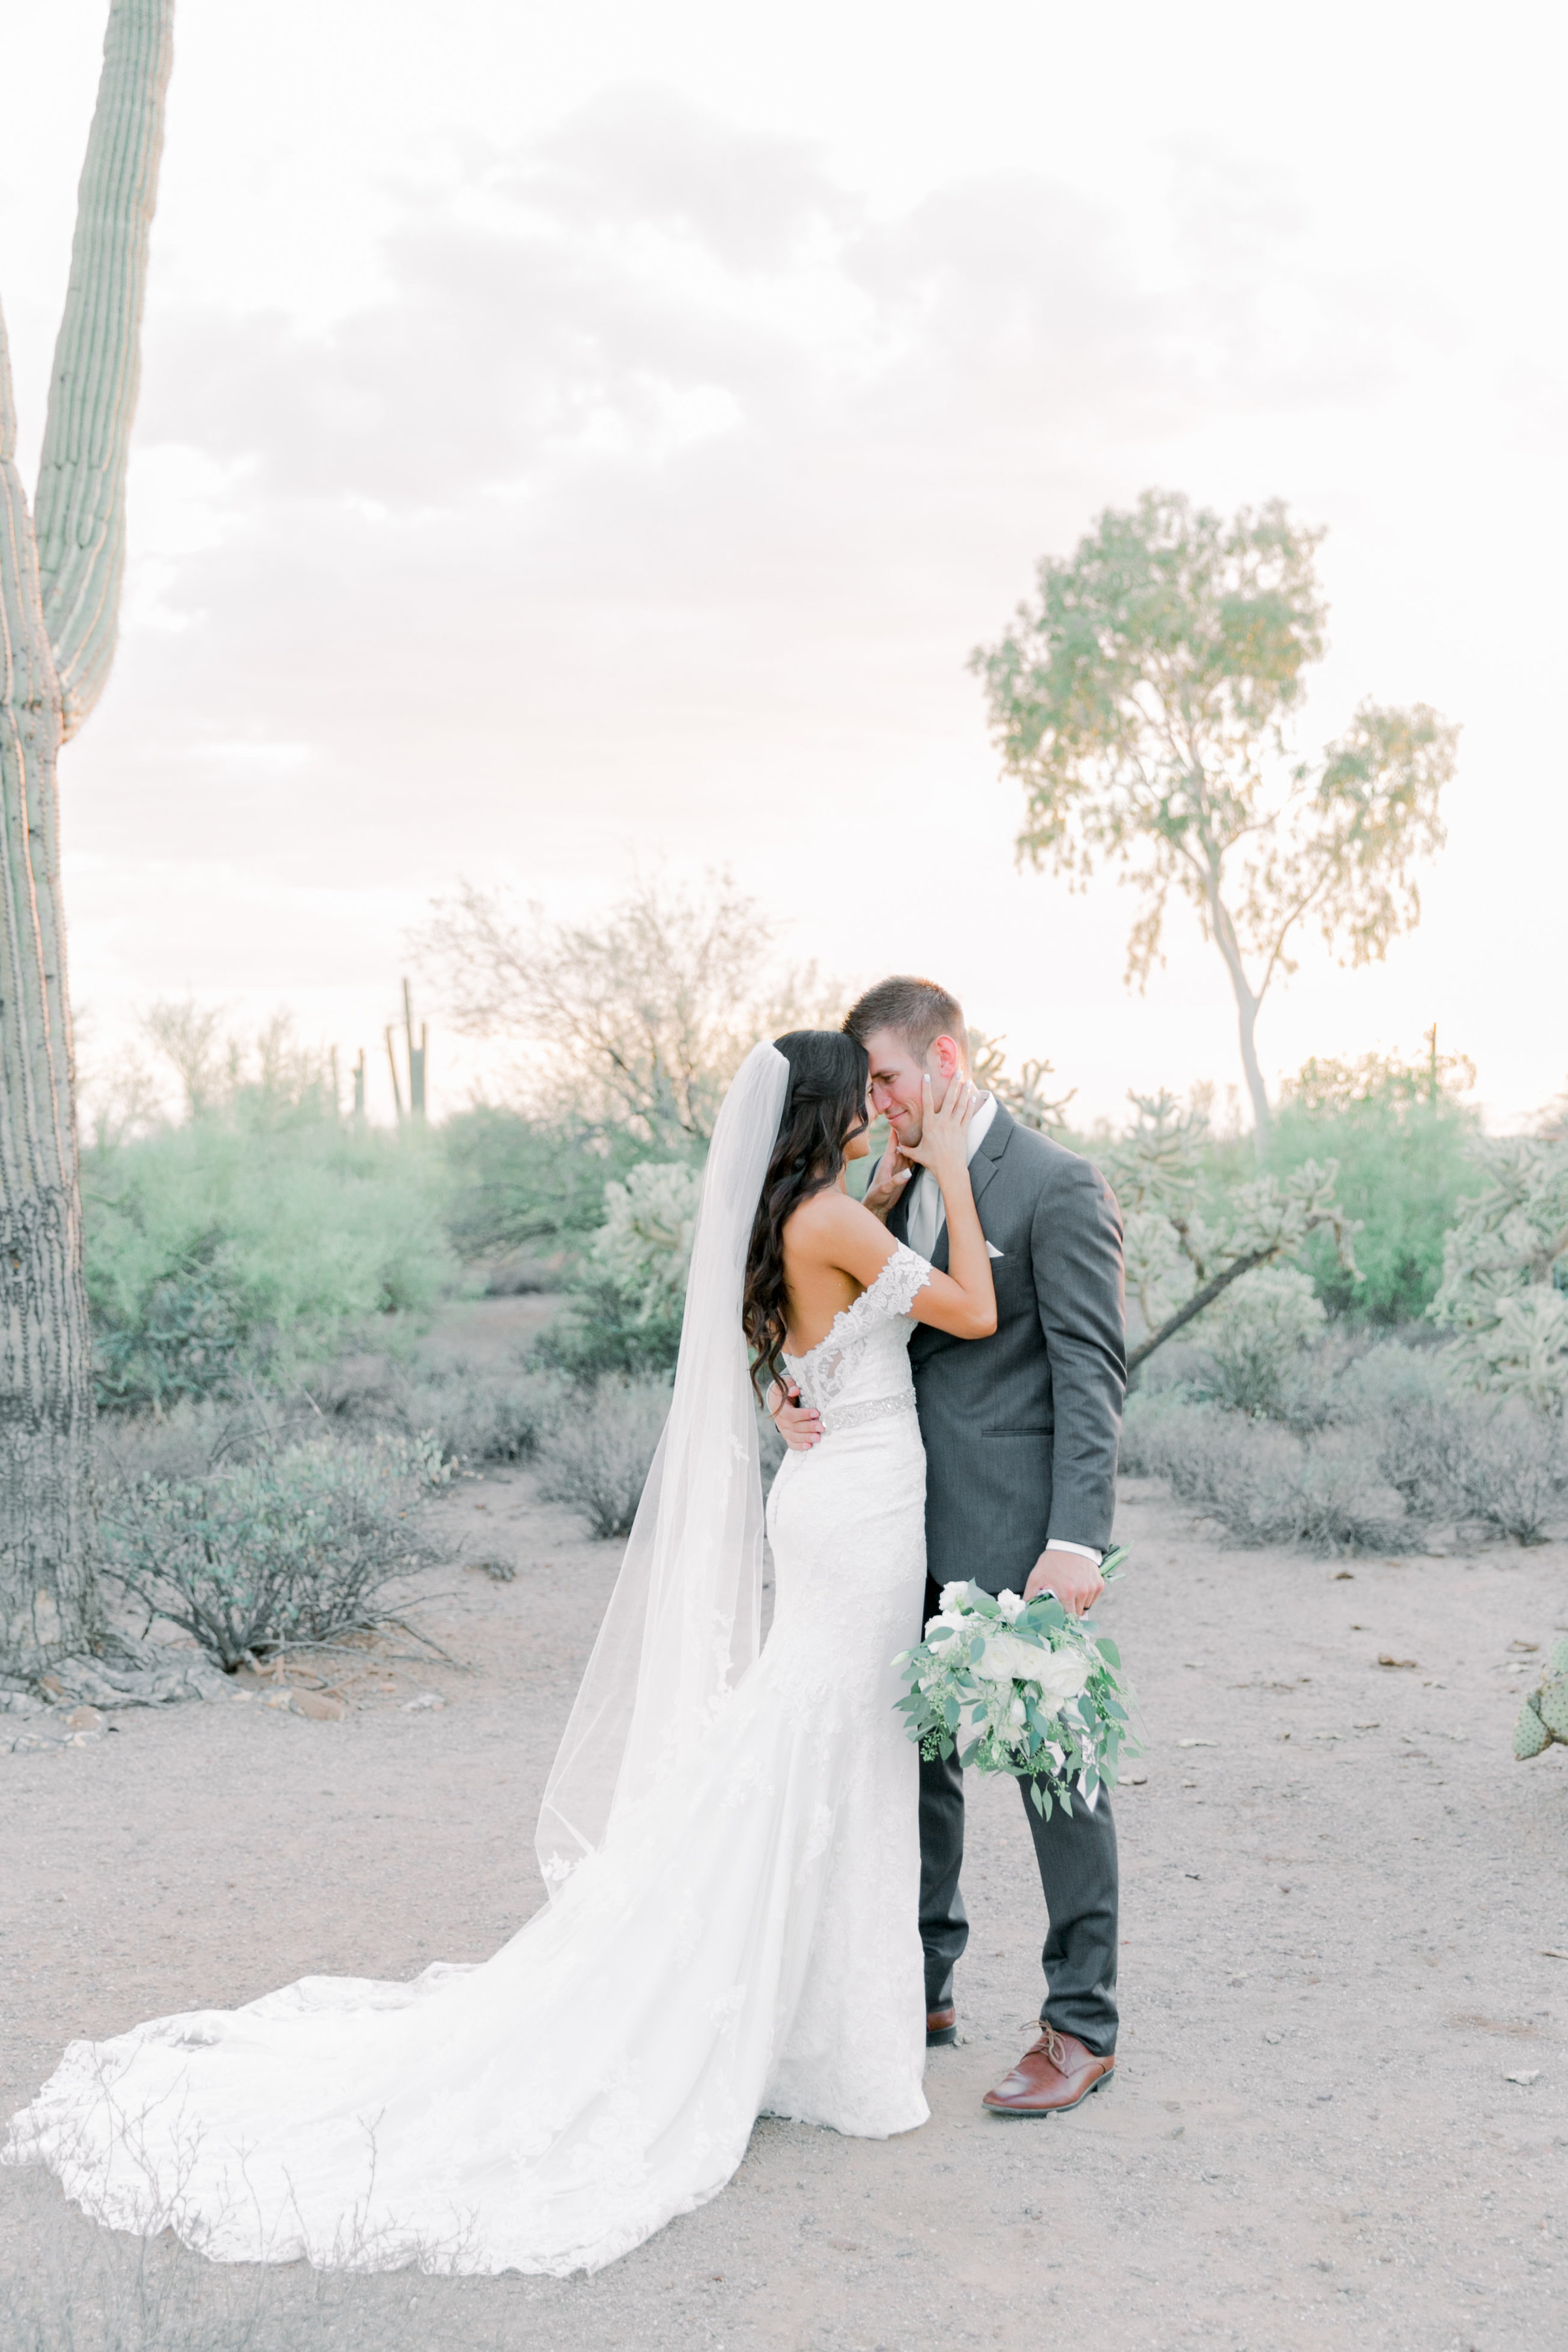 Karlie Colleen Photography - Arizona Wedding - The Paseo Venue - Jackie & Ryan -637